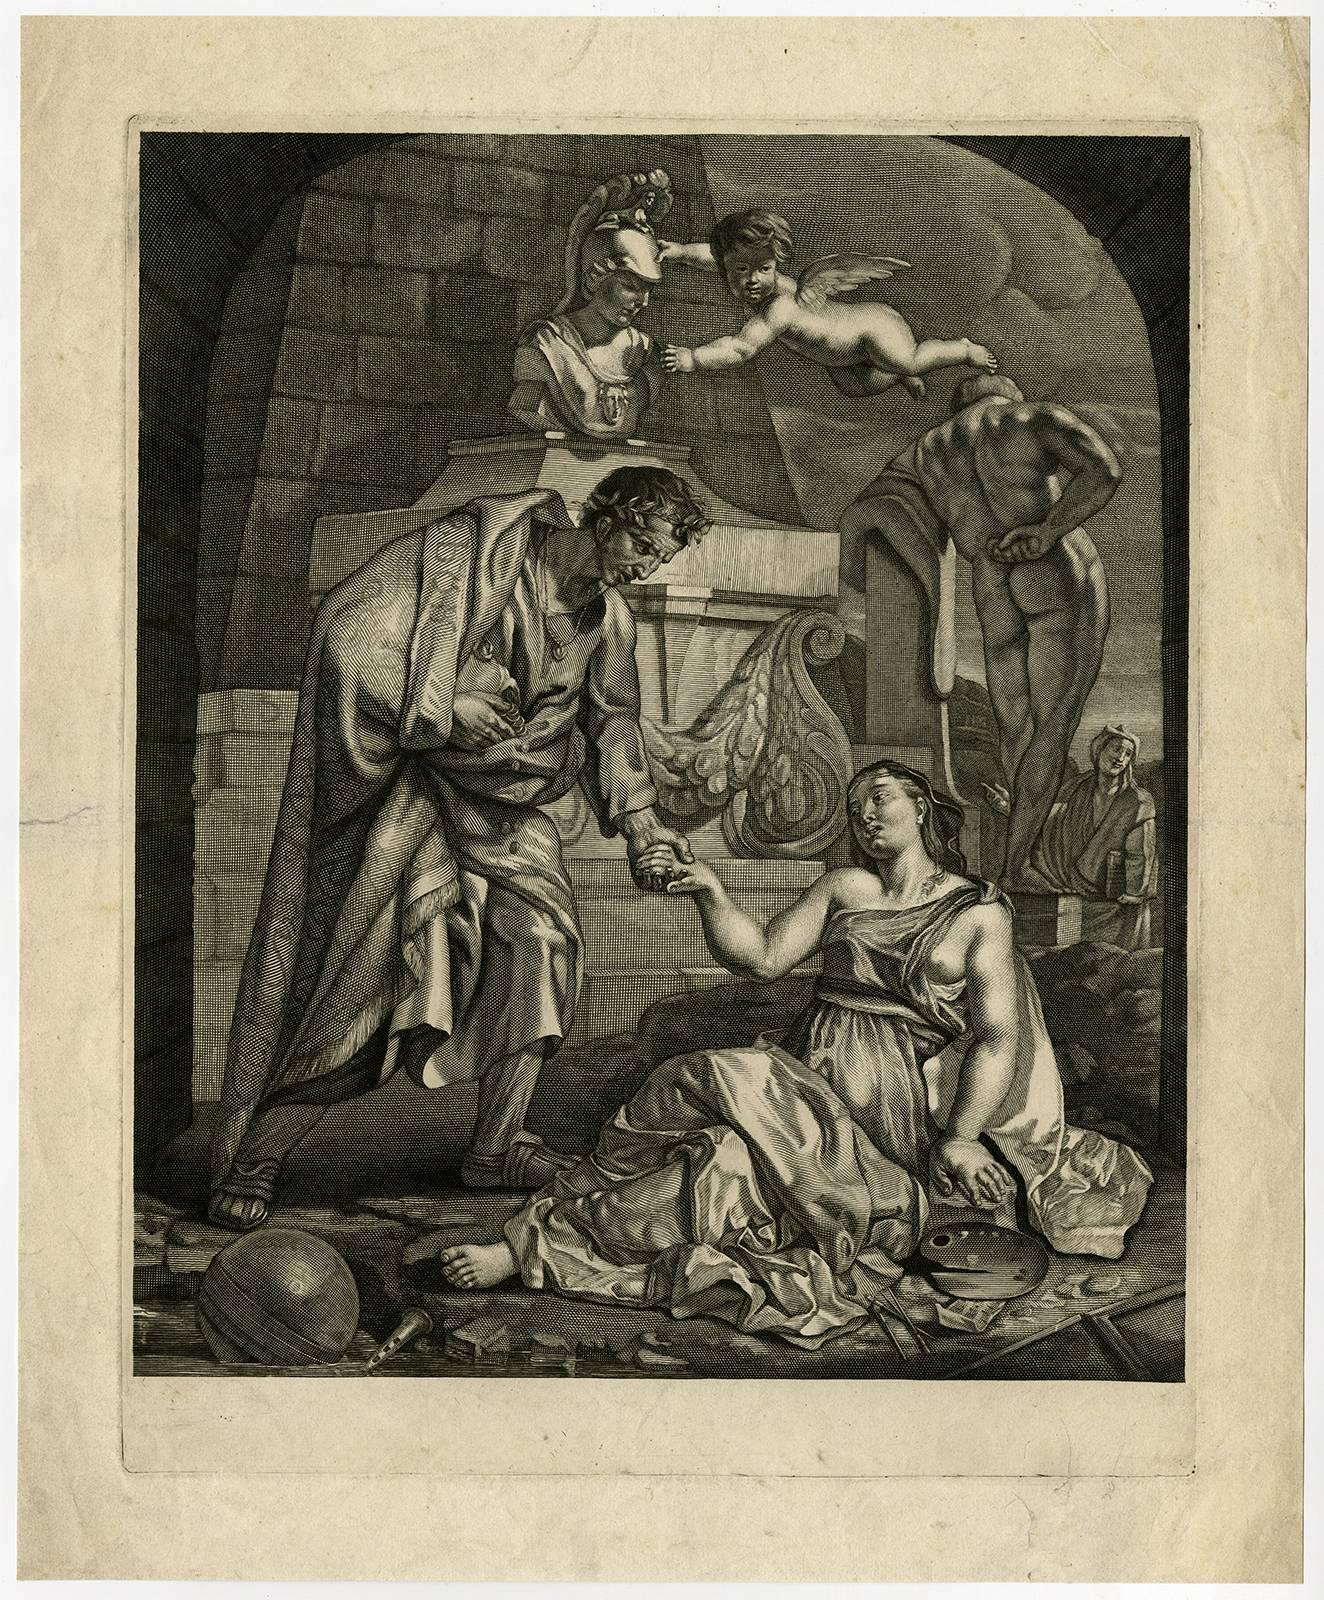 Gerard de Lairesse Figurative Print - Untitled allegory - Emperor Augustus helps a woman up